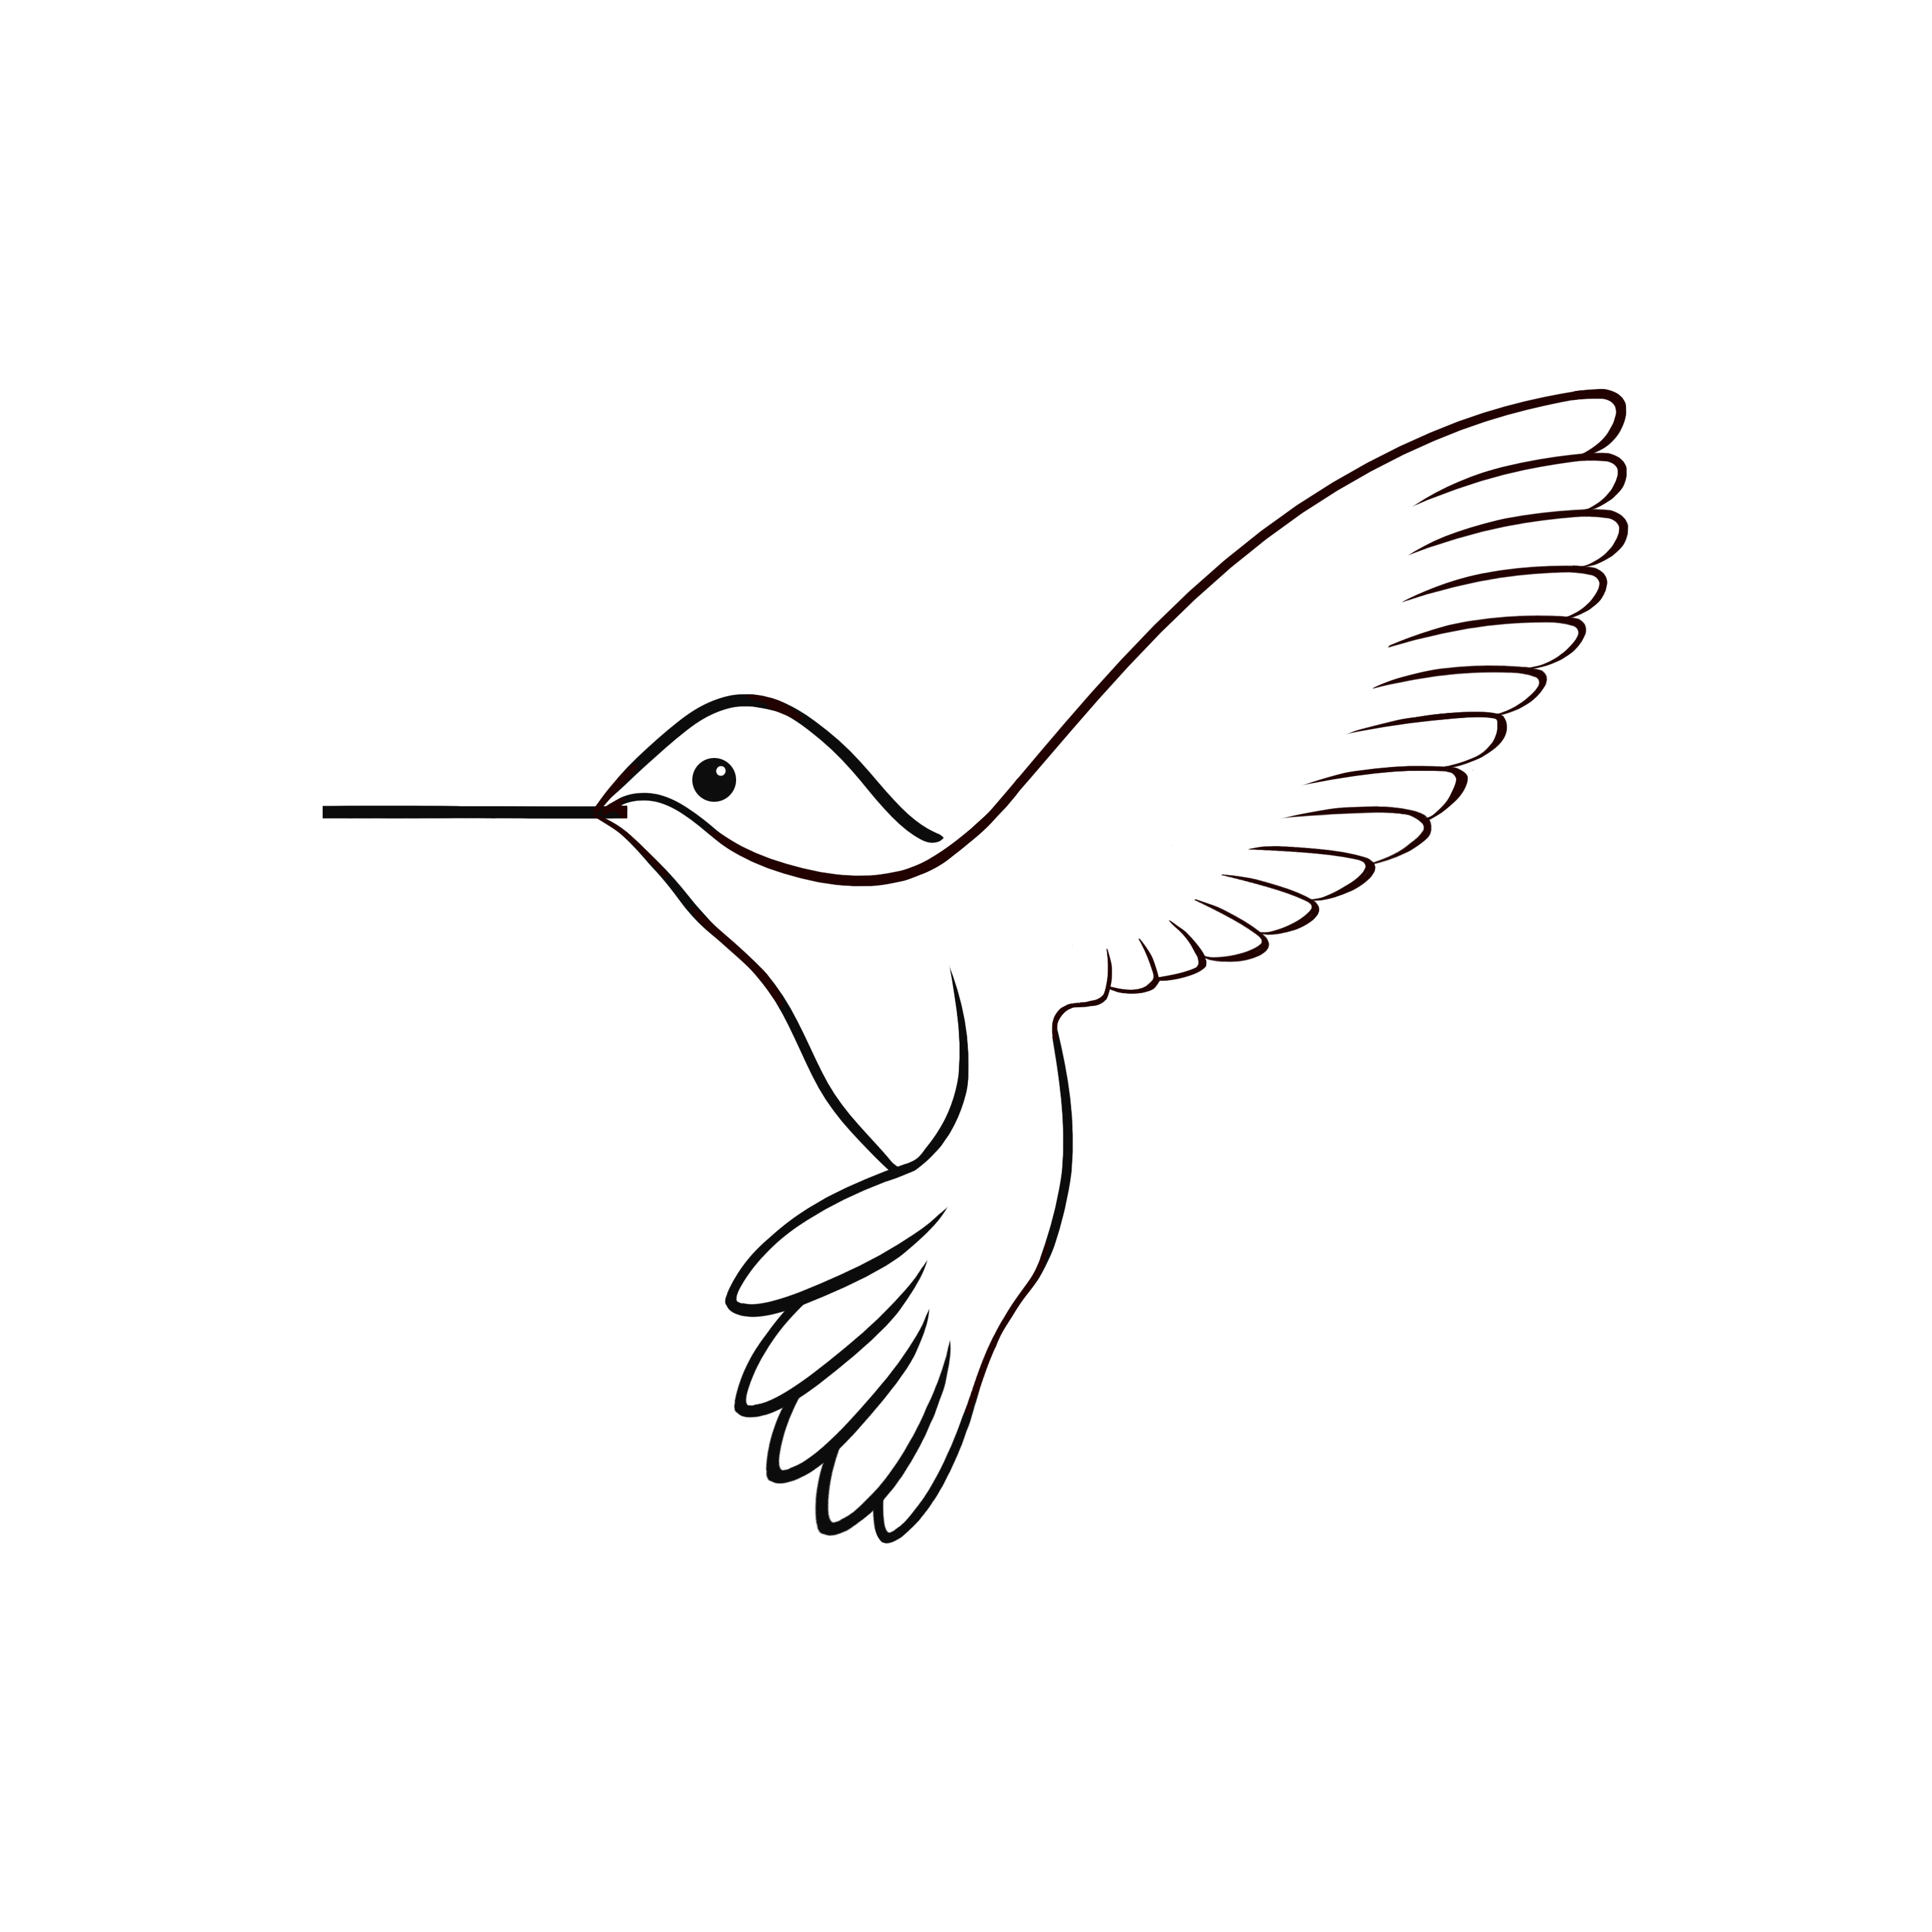 Idle Hummingbird animation by constancelea on DeviantArt